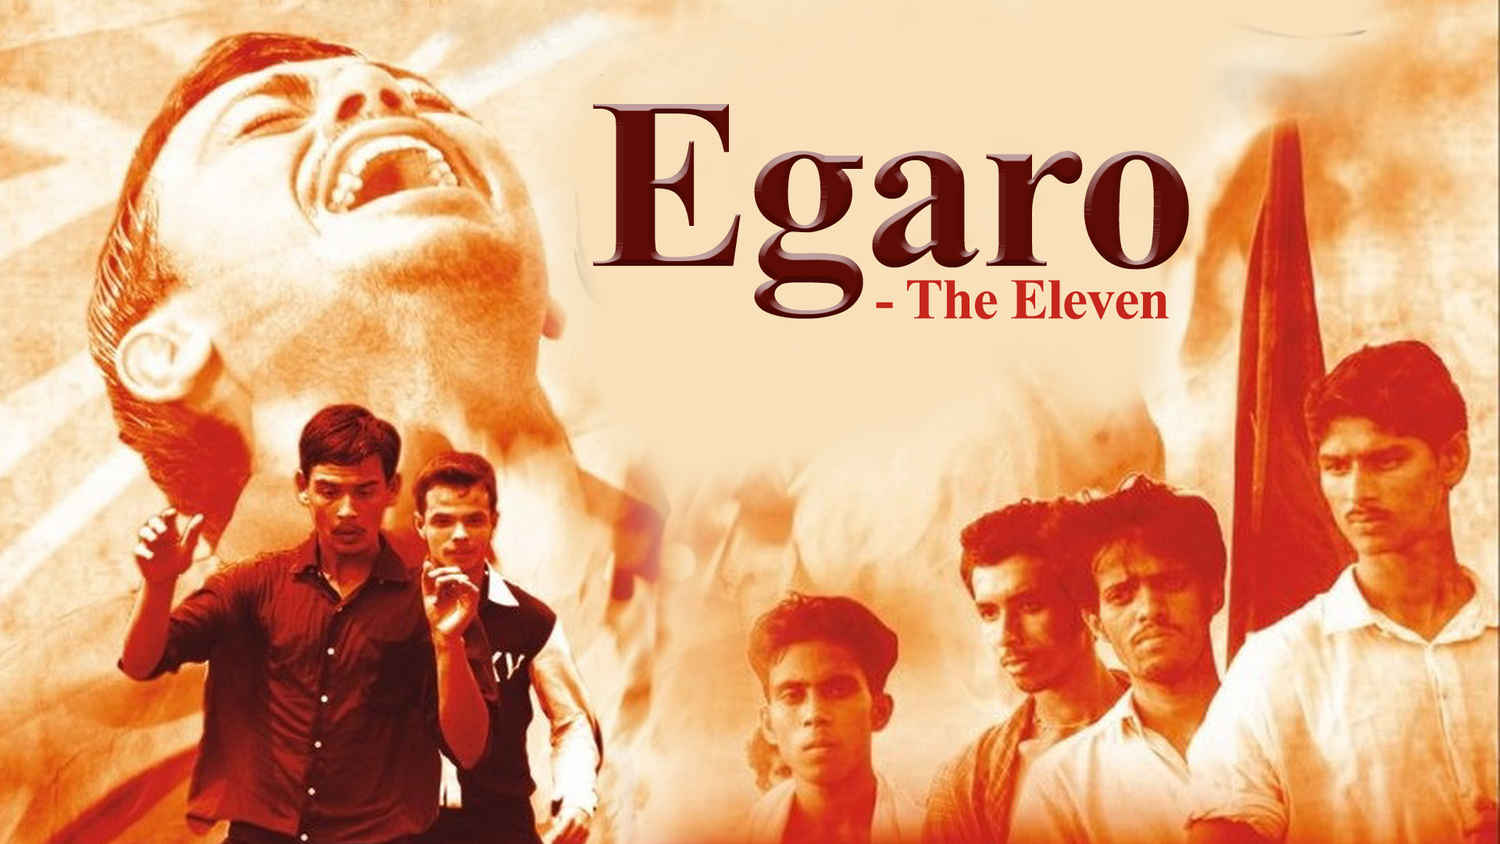 Egaro - The Eleven